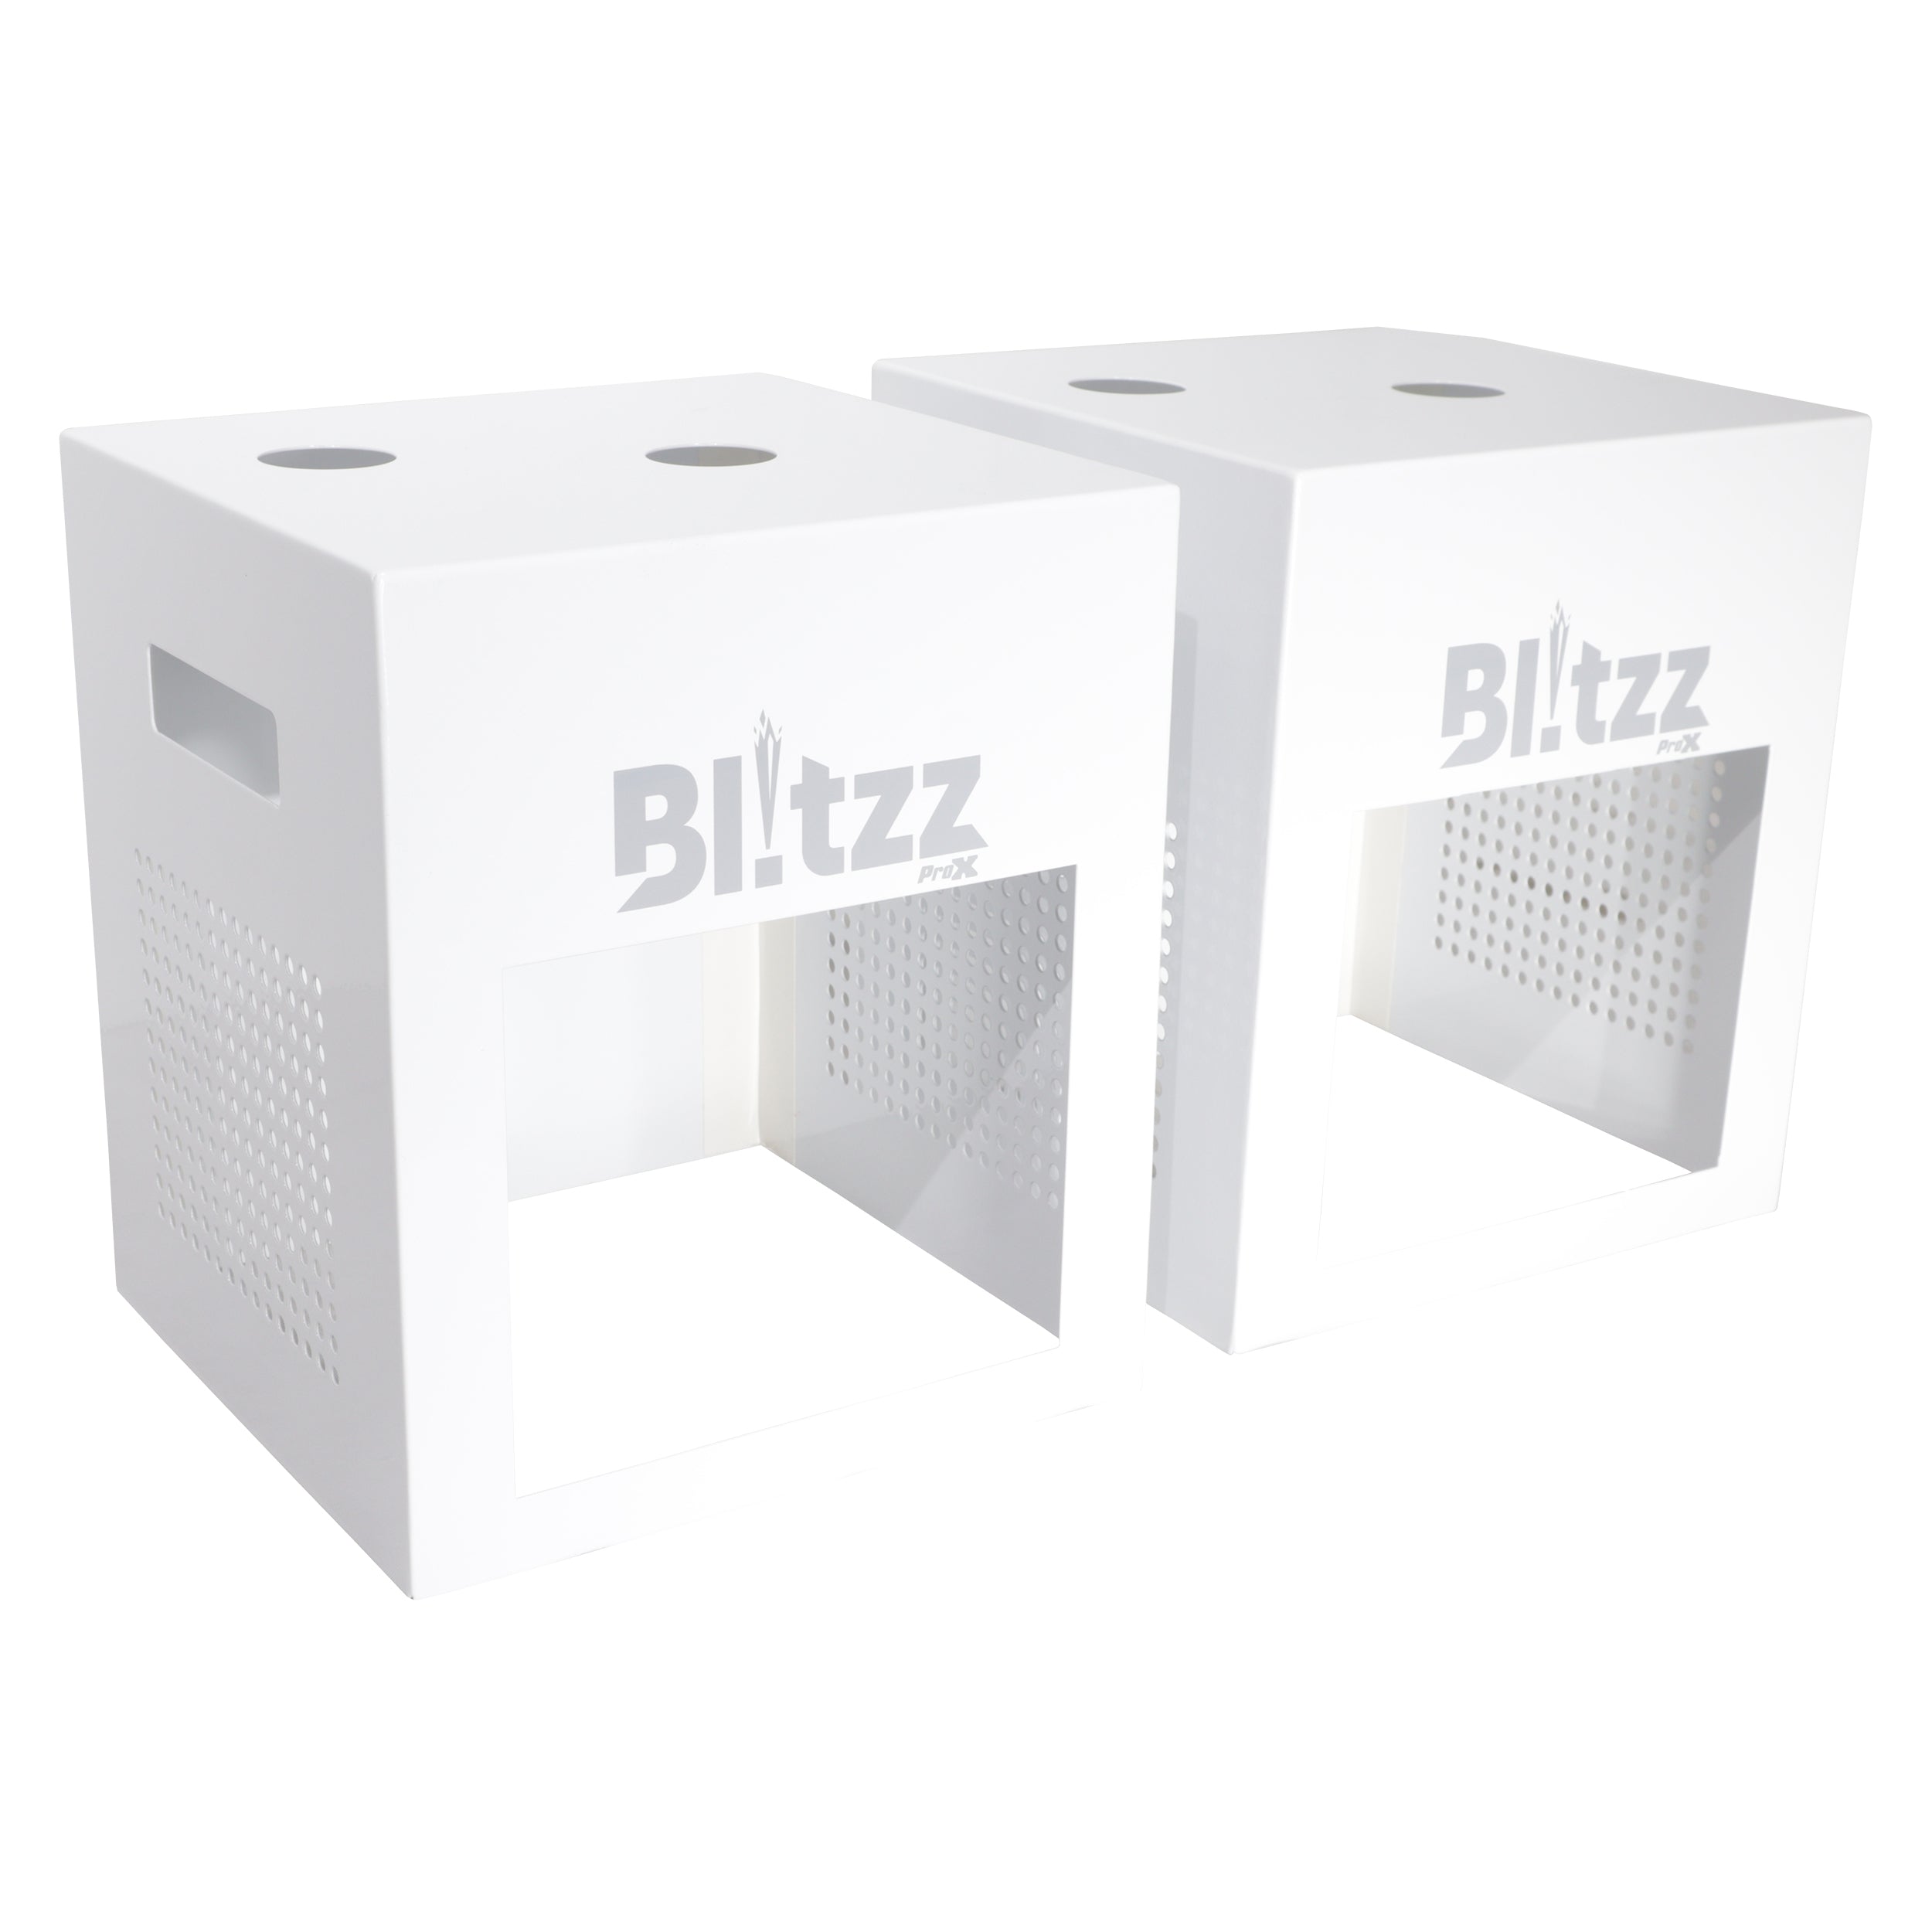 ProX X-BLITZZ-FX COVER X2 2x Aluminium White Covers for BlitzzFX Cold Spark Machine - Hollywood DJ